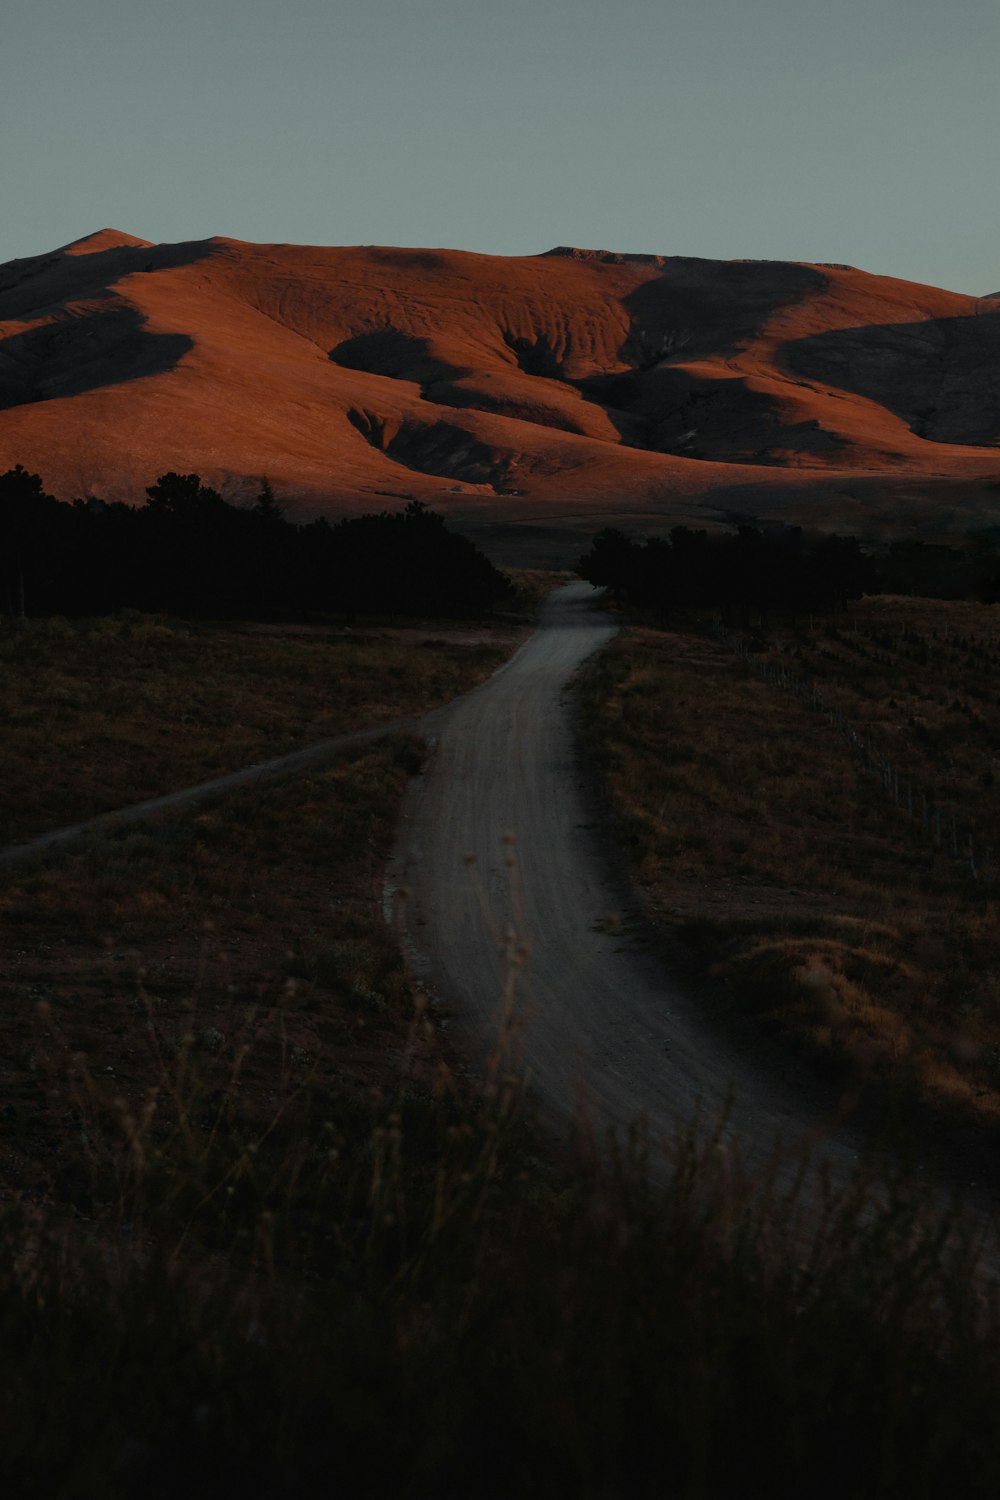 estrada de asfalto cinza no meio do campo marrom